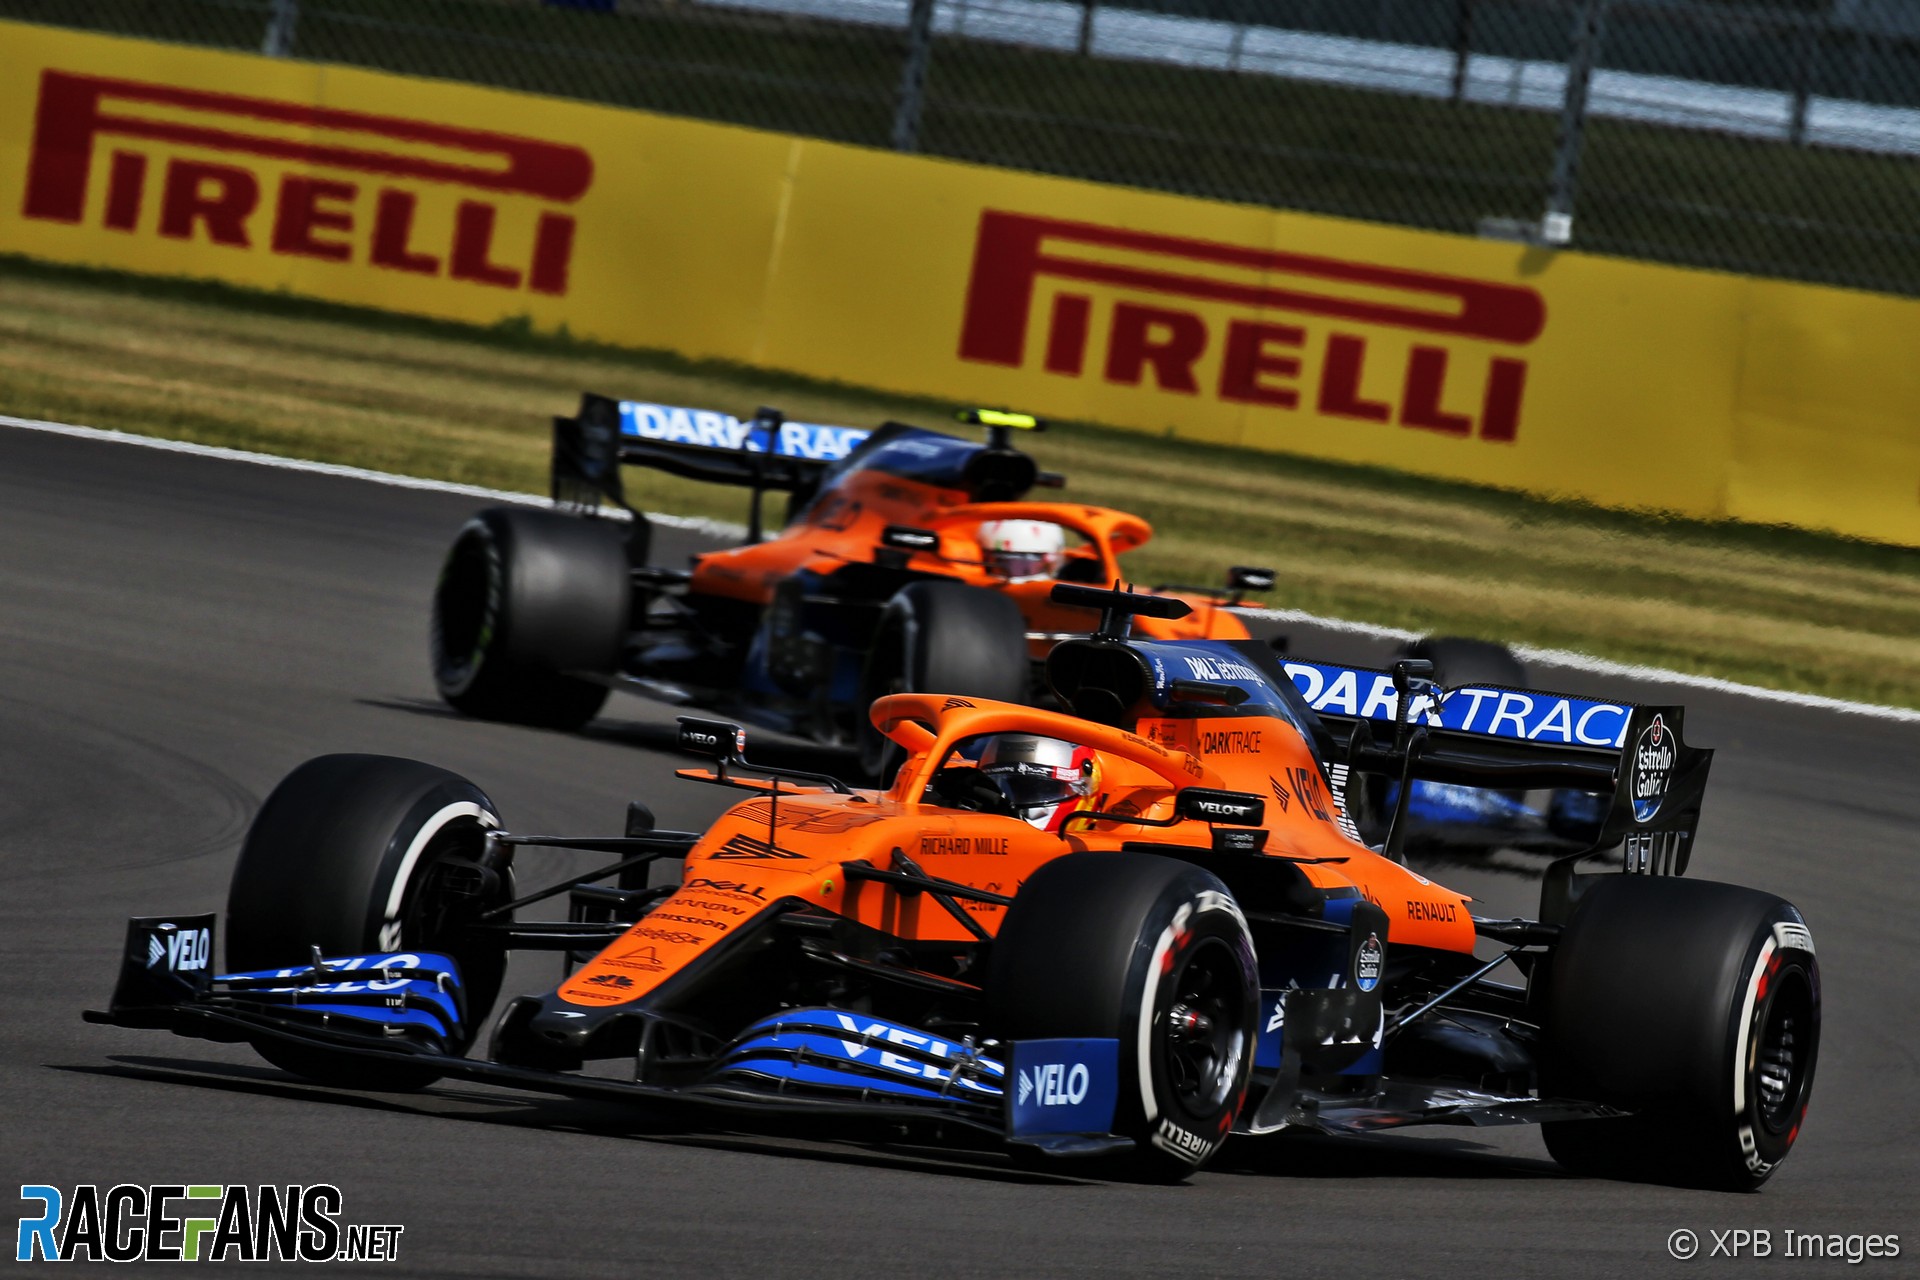 Carlos Sainz Jnr, McLaren, Silverstone, 2020